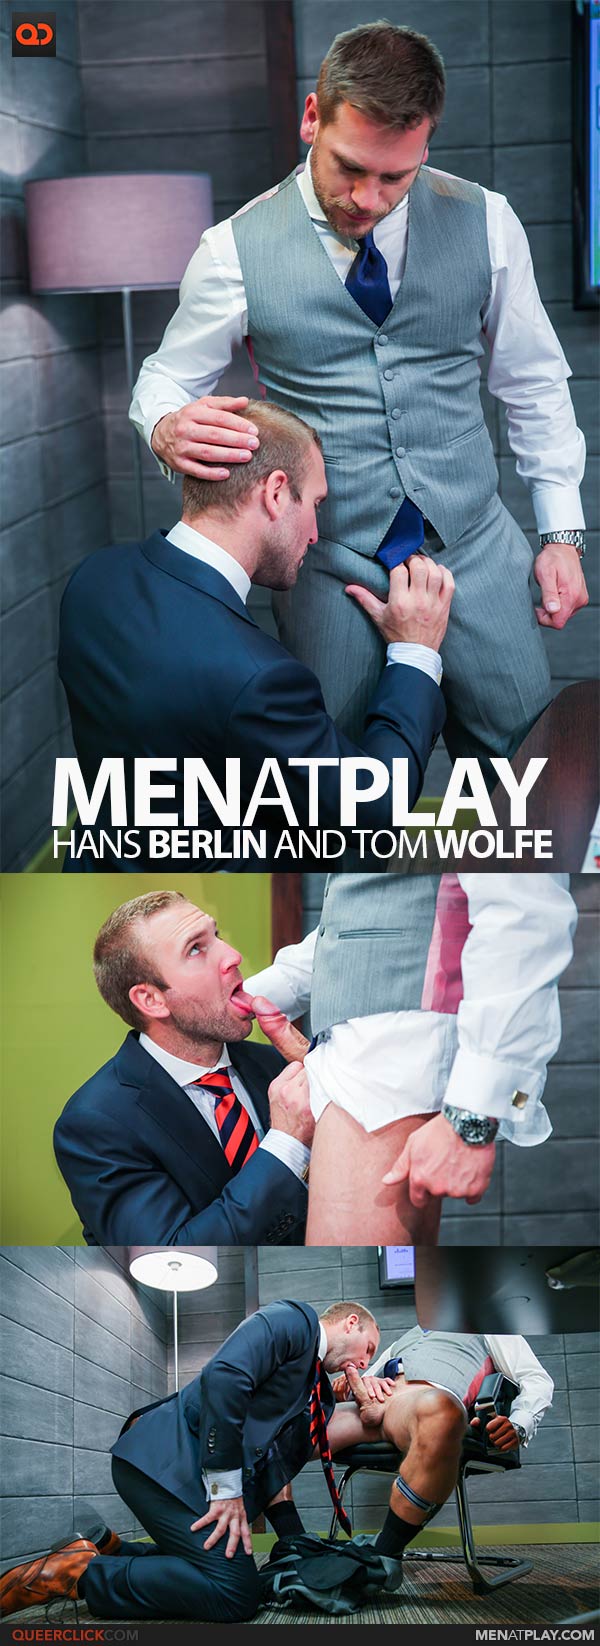 MenAtPlay: Hans Berlin and Tom Wolfe - Bonus Update